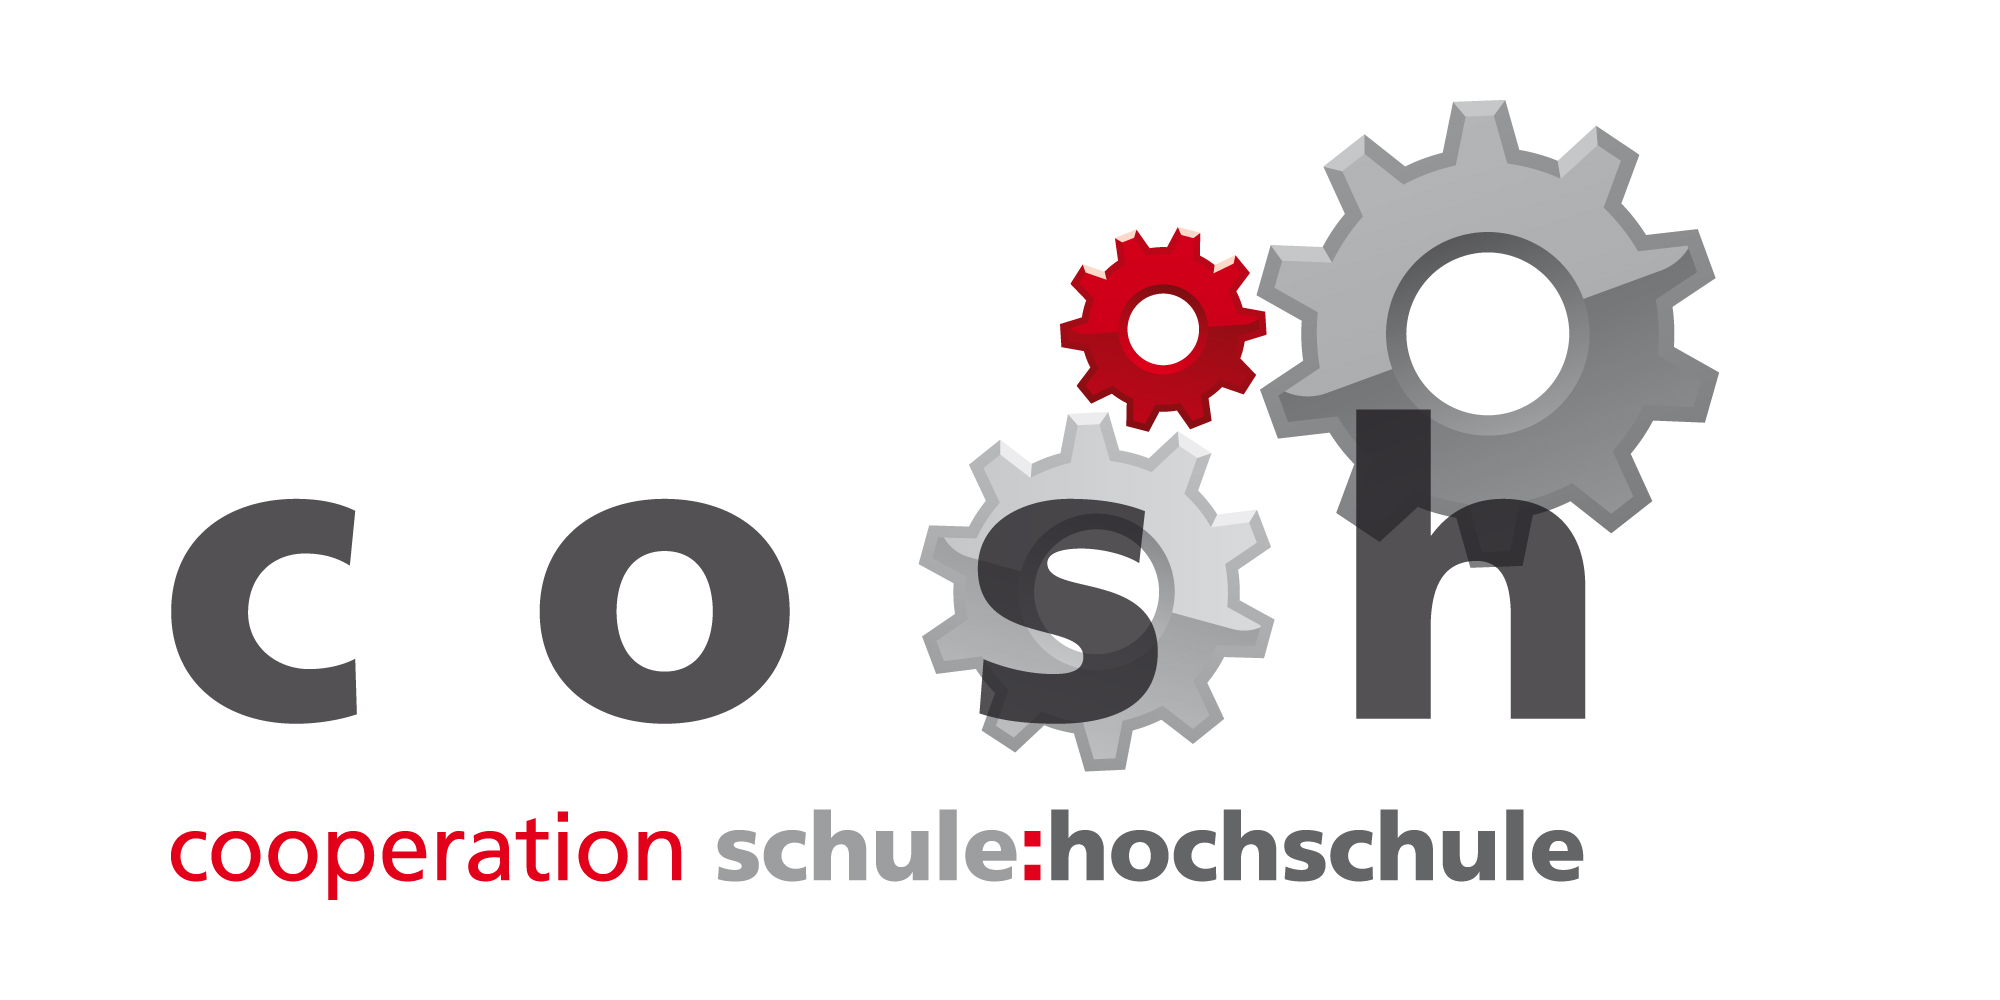 cosh-logo_zw-130829.jpg